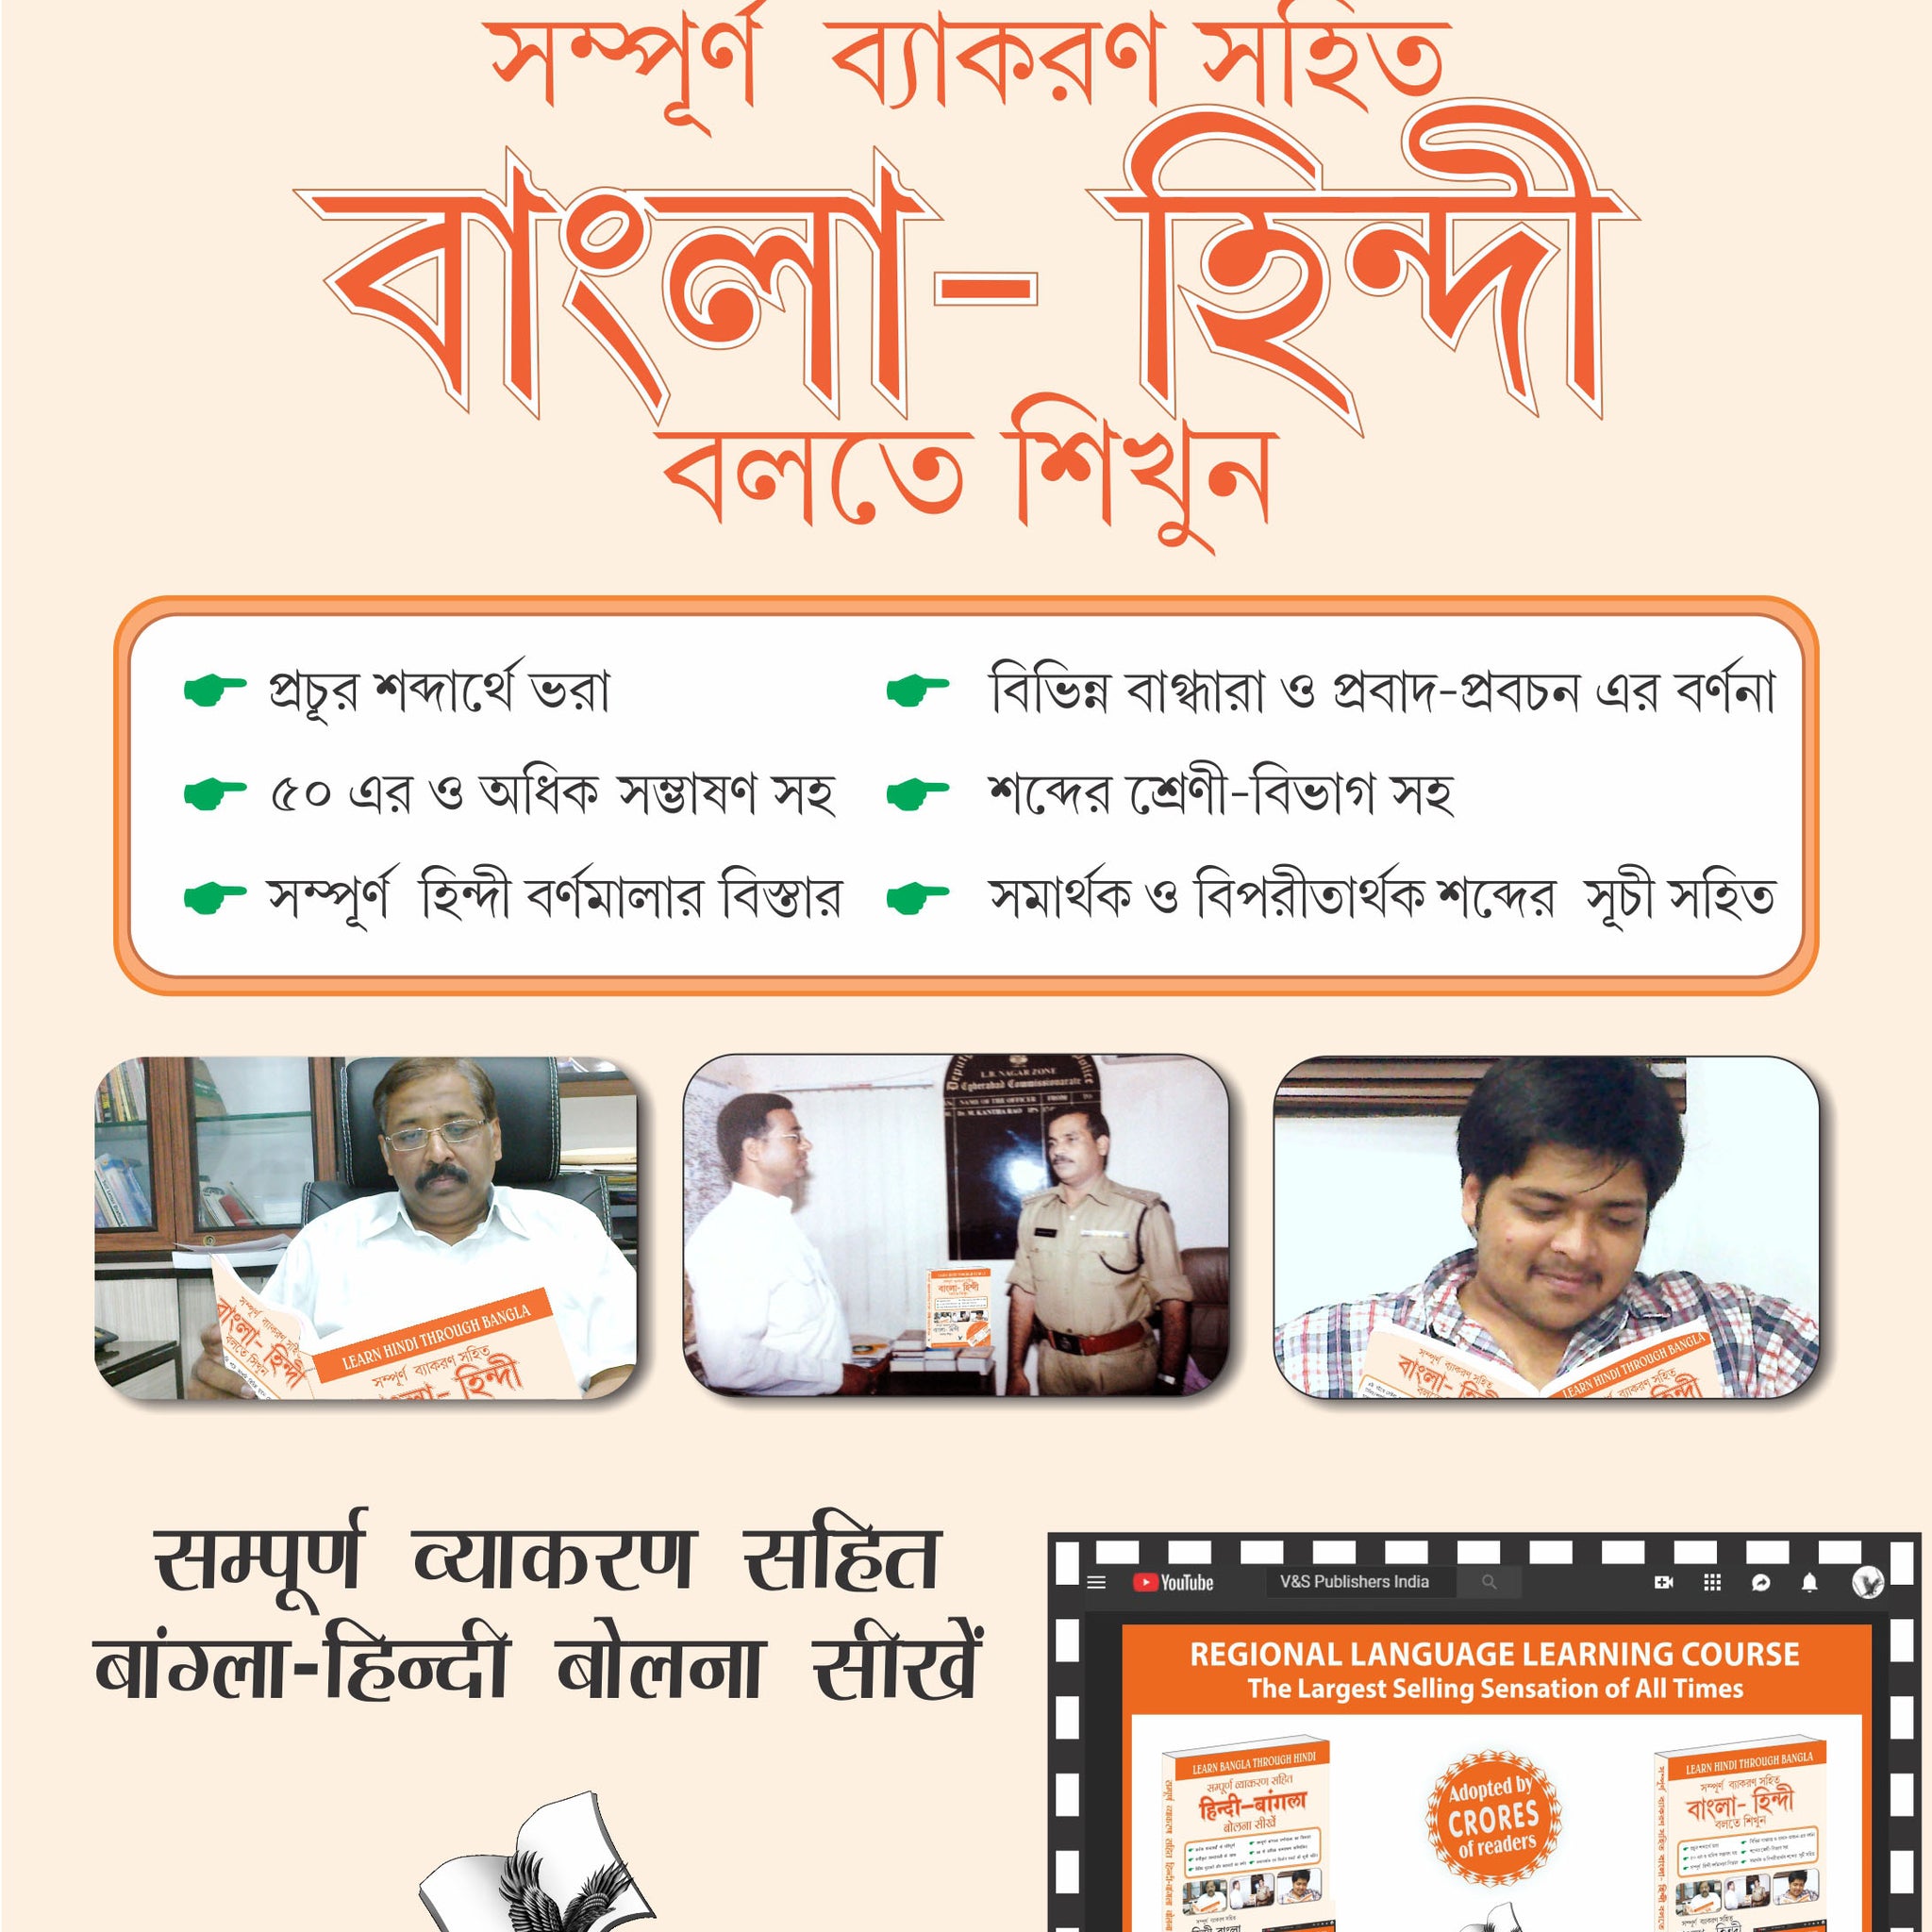 Learn Hindi Through Bangla(Bangla To Hindi Learning Course) (With Youtube AV)